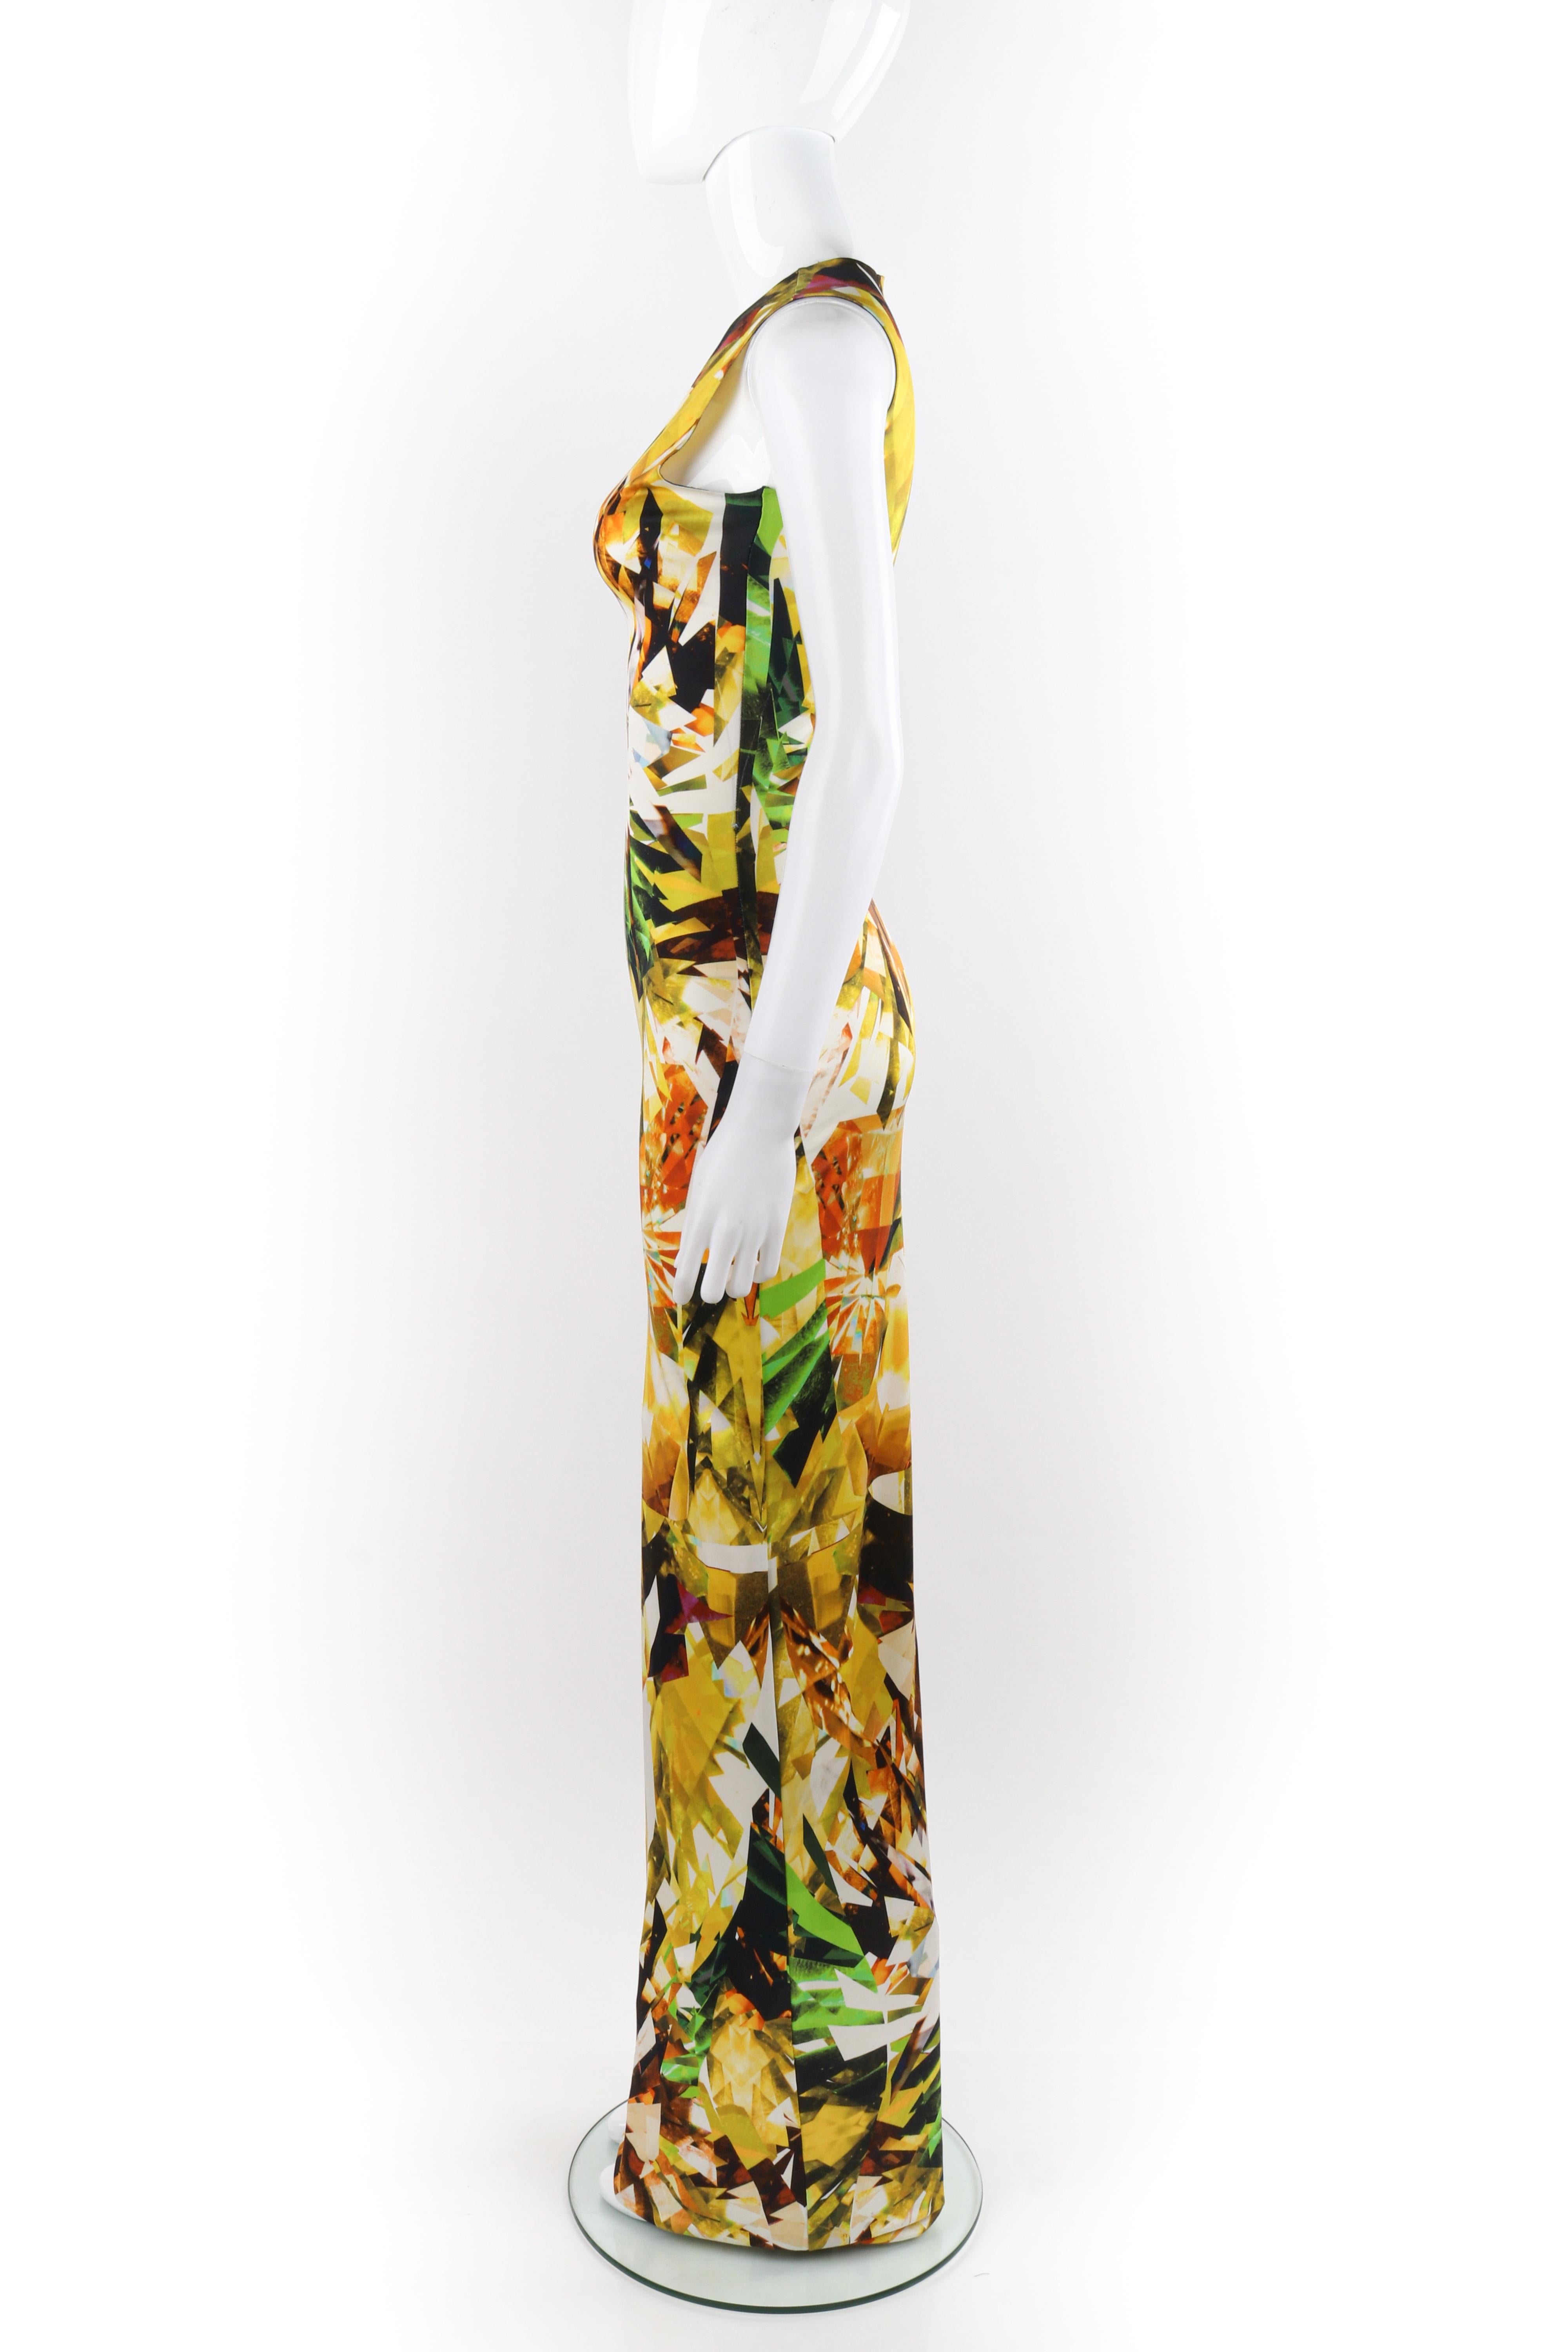 ALEXANDER McQUEEN S/S 2009 “Natural Distinction” Crystal Kaleidoscope Maxi Dress For Sale 1